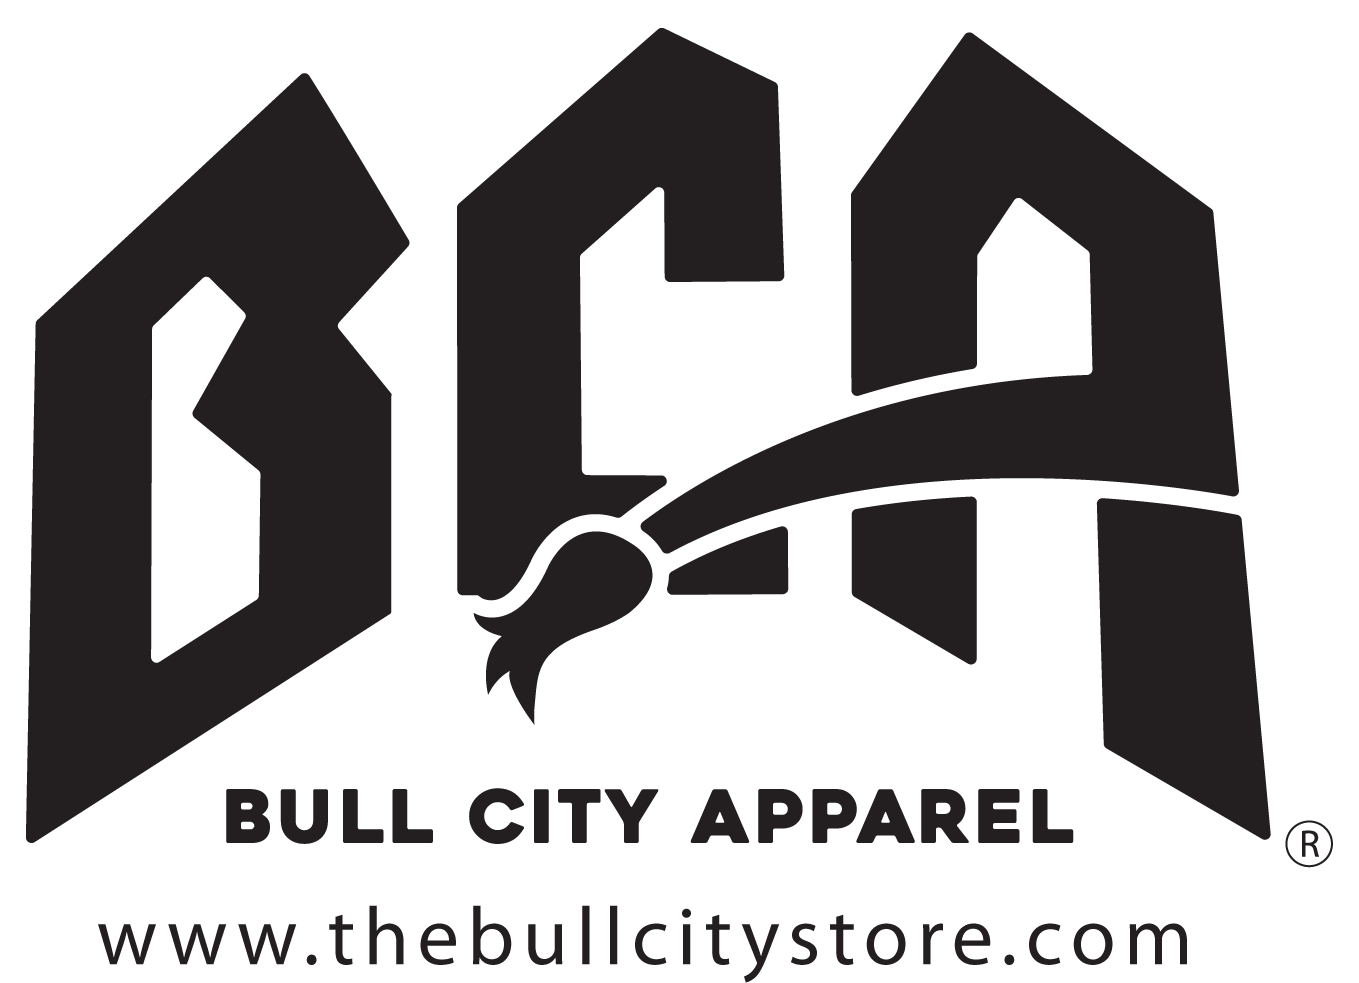 Bulls Apparel, Bulls Gear, Durham Bulls Merch